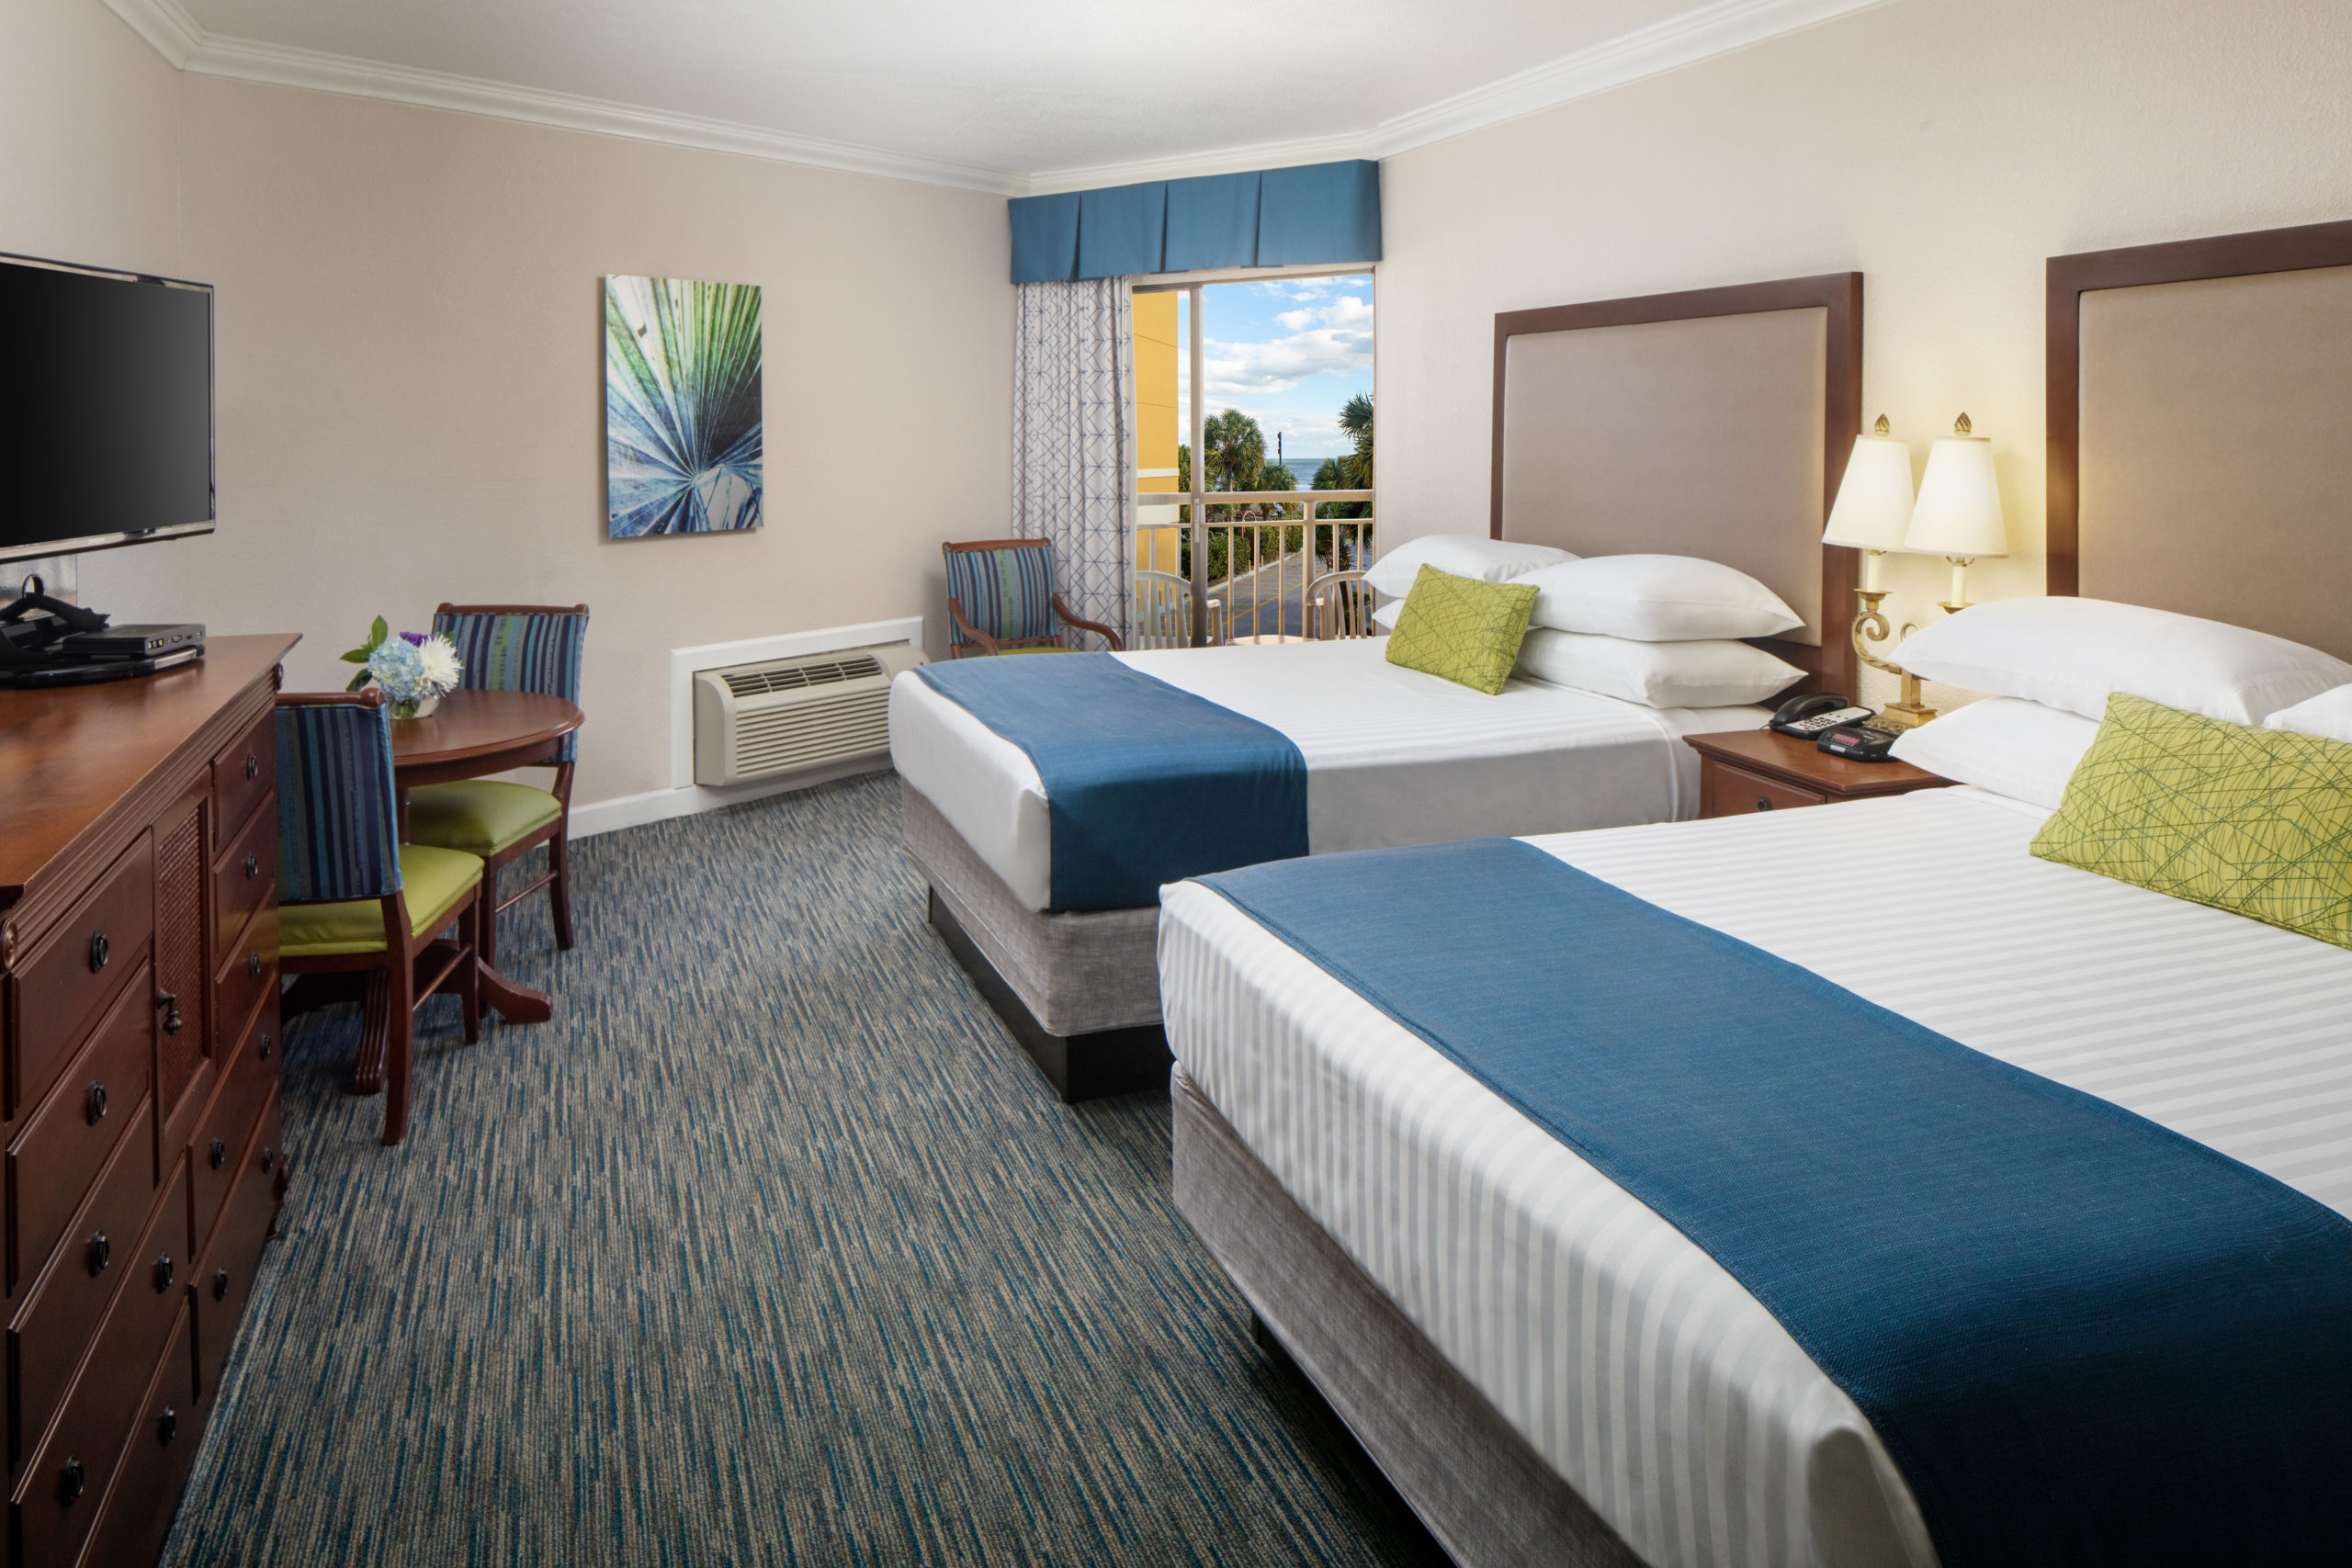 Holiday Inn Oceanfront Resort Low-rise Ocean View